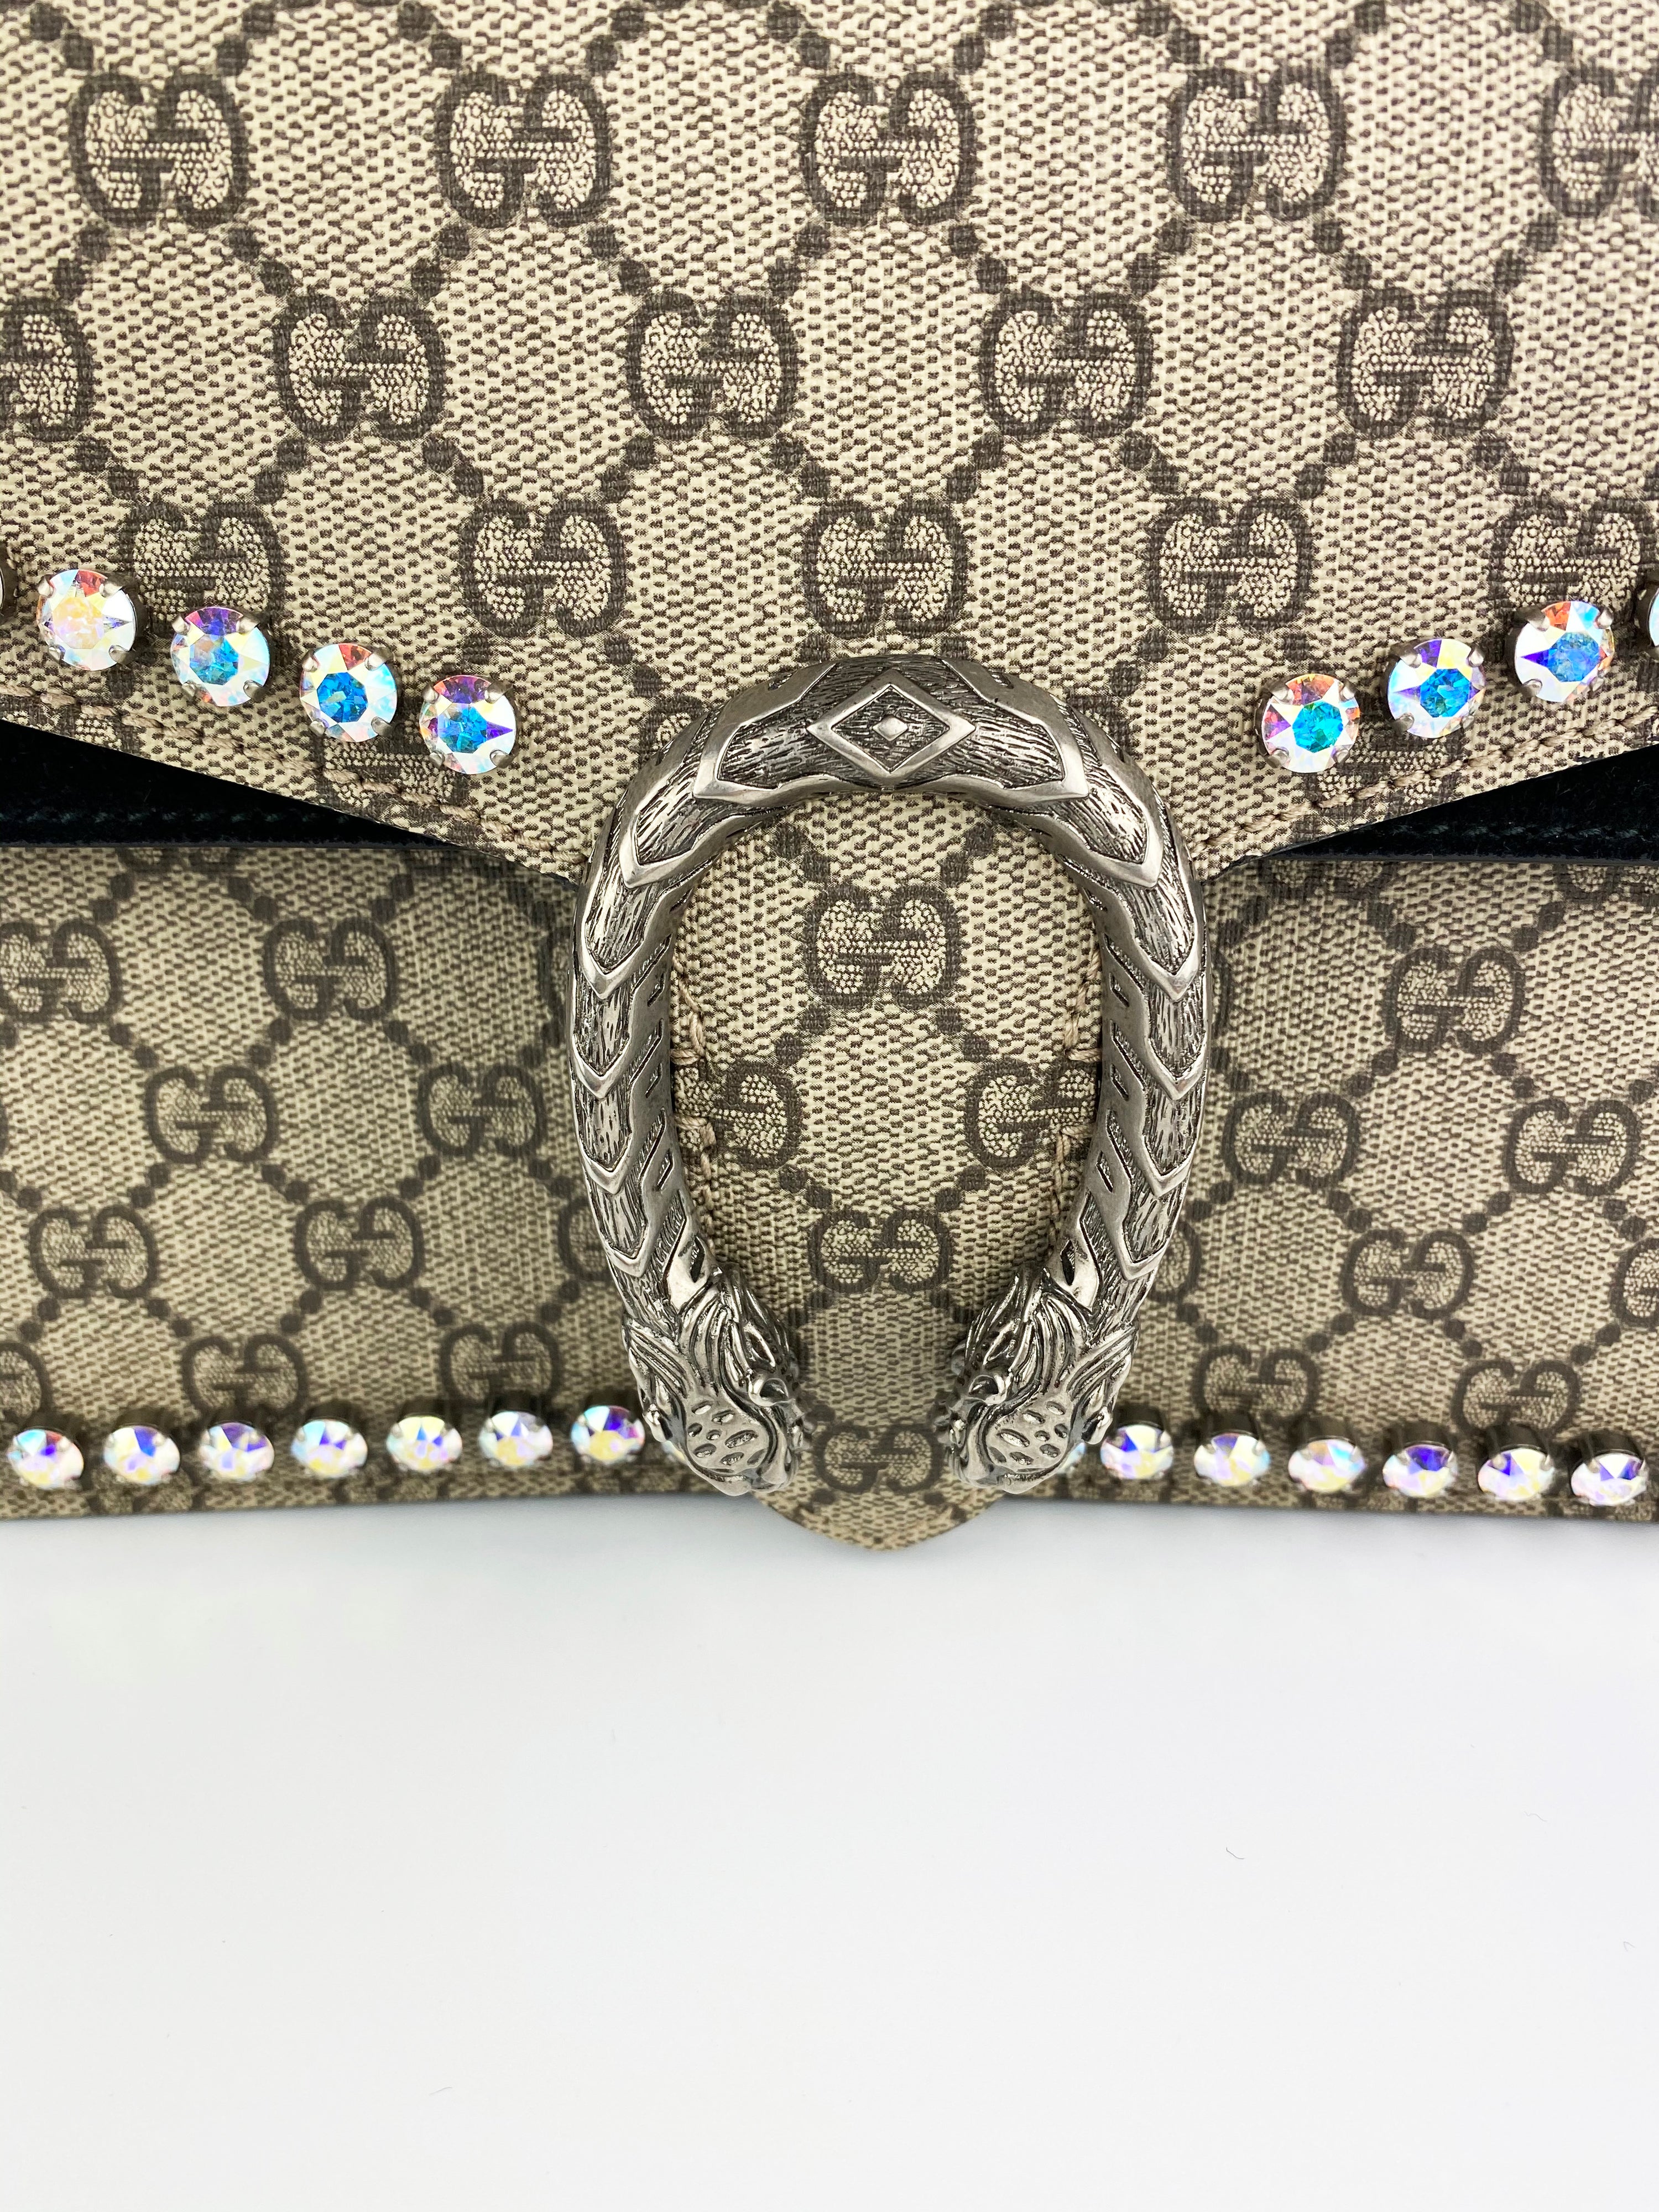 Gucci Dionysus Crystal Embellished